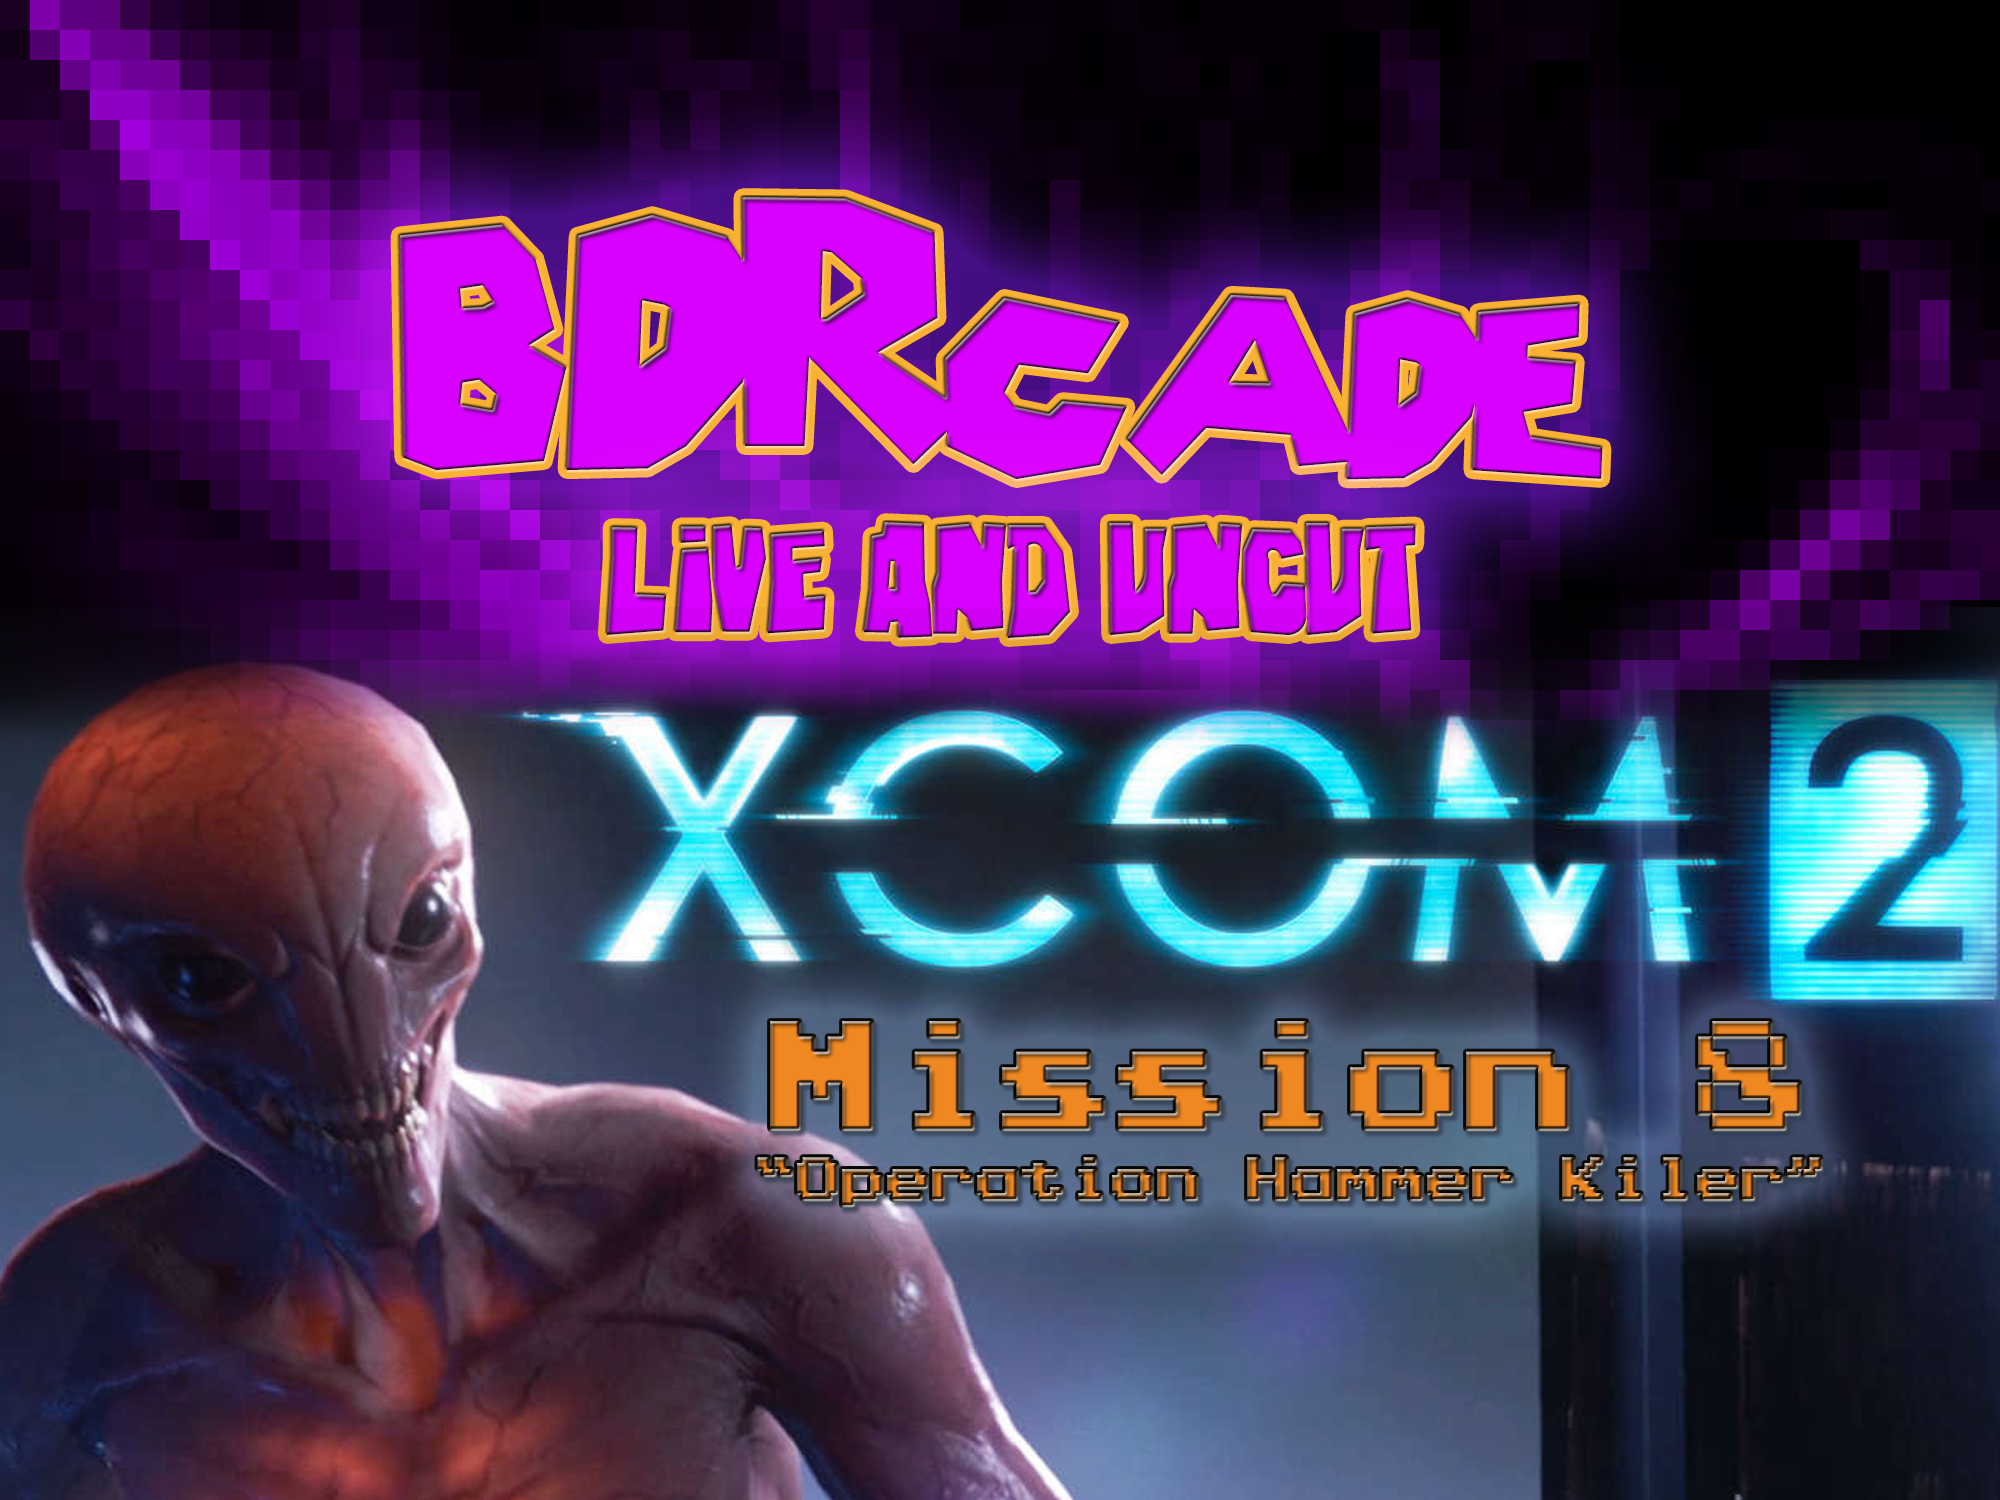 XCOM 2 – Mission 8 : “Operation Hammer Killer” – A BDRcade Live Stream